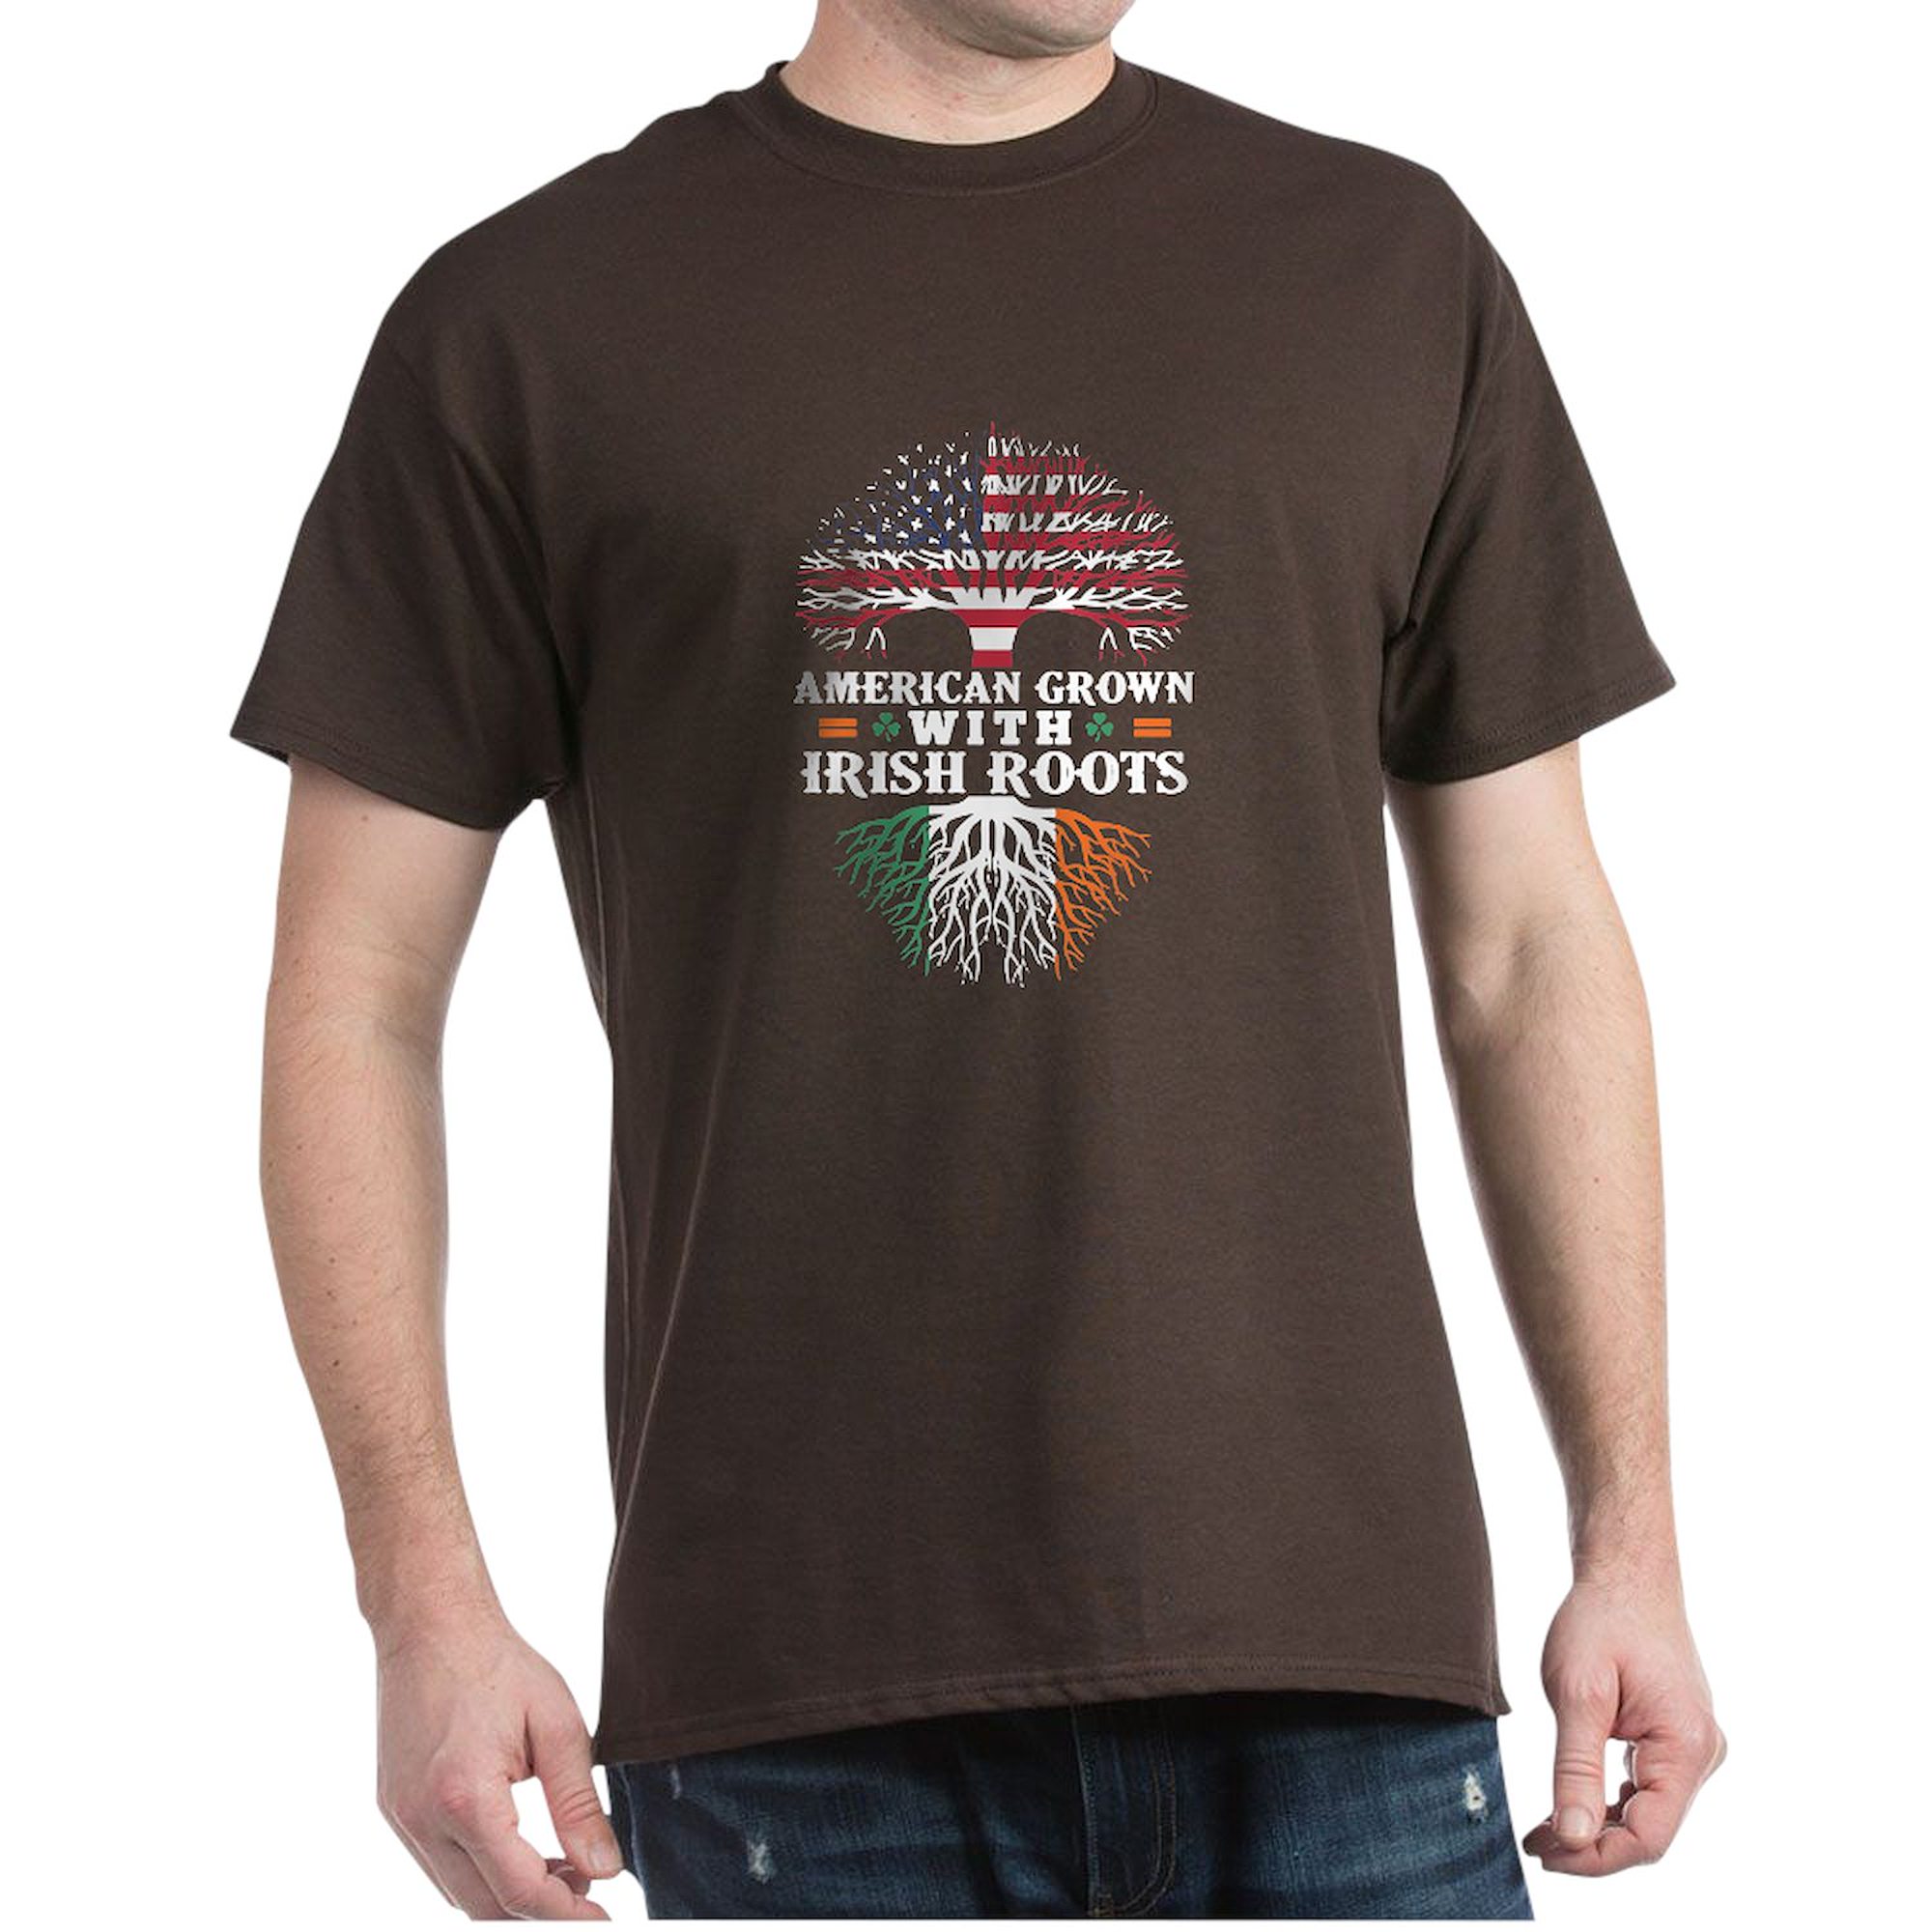 CafePress - American Grown With Irish Roots Shirt T Shirt - 100% Cotton T-Shirt - image 1 of 4